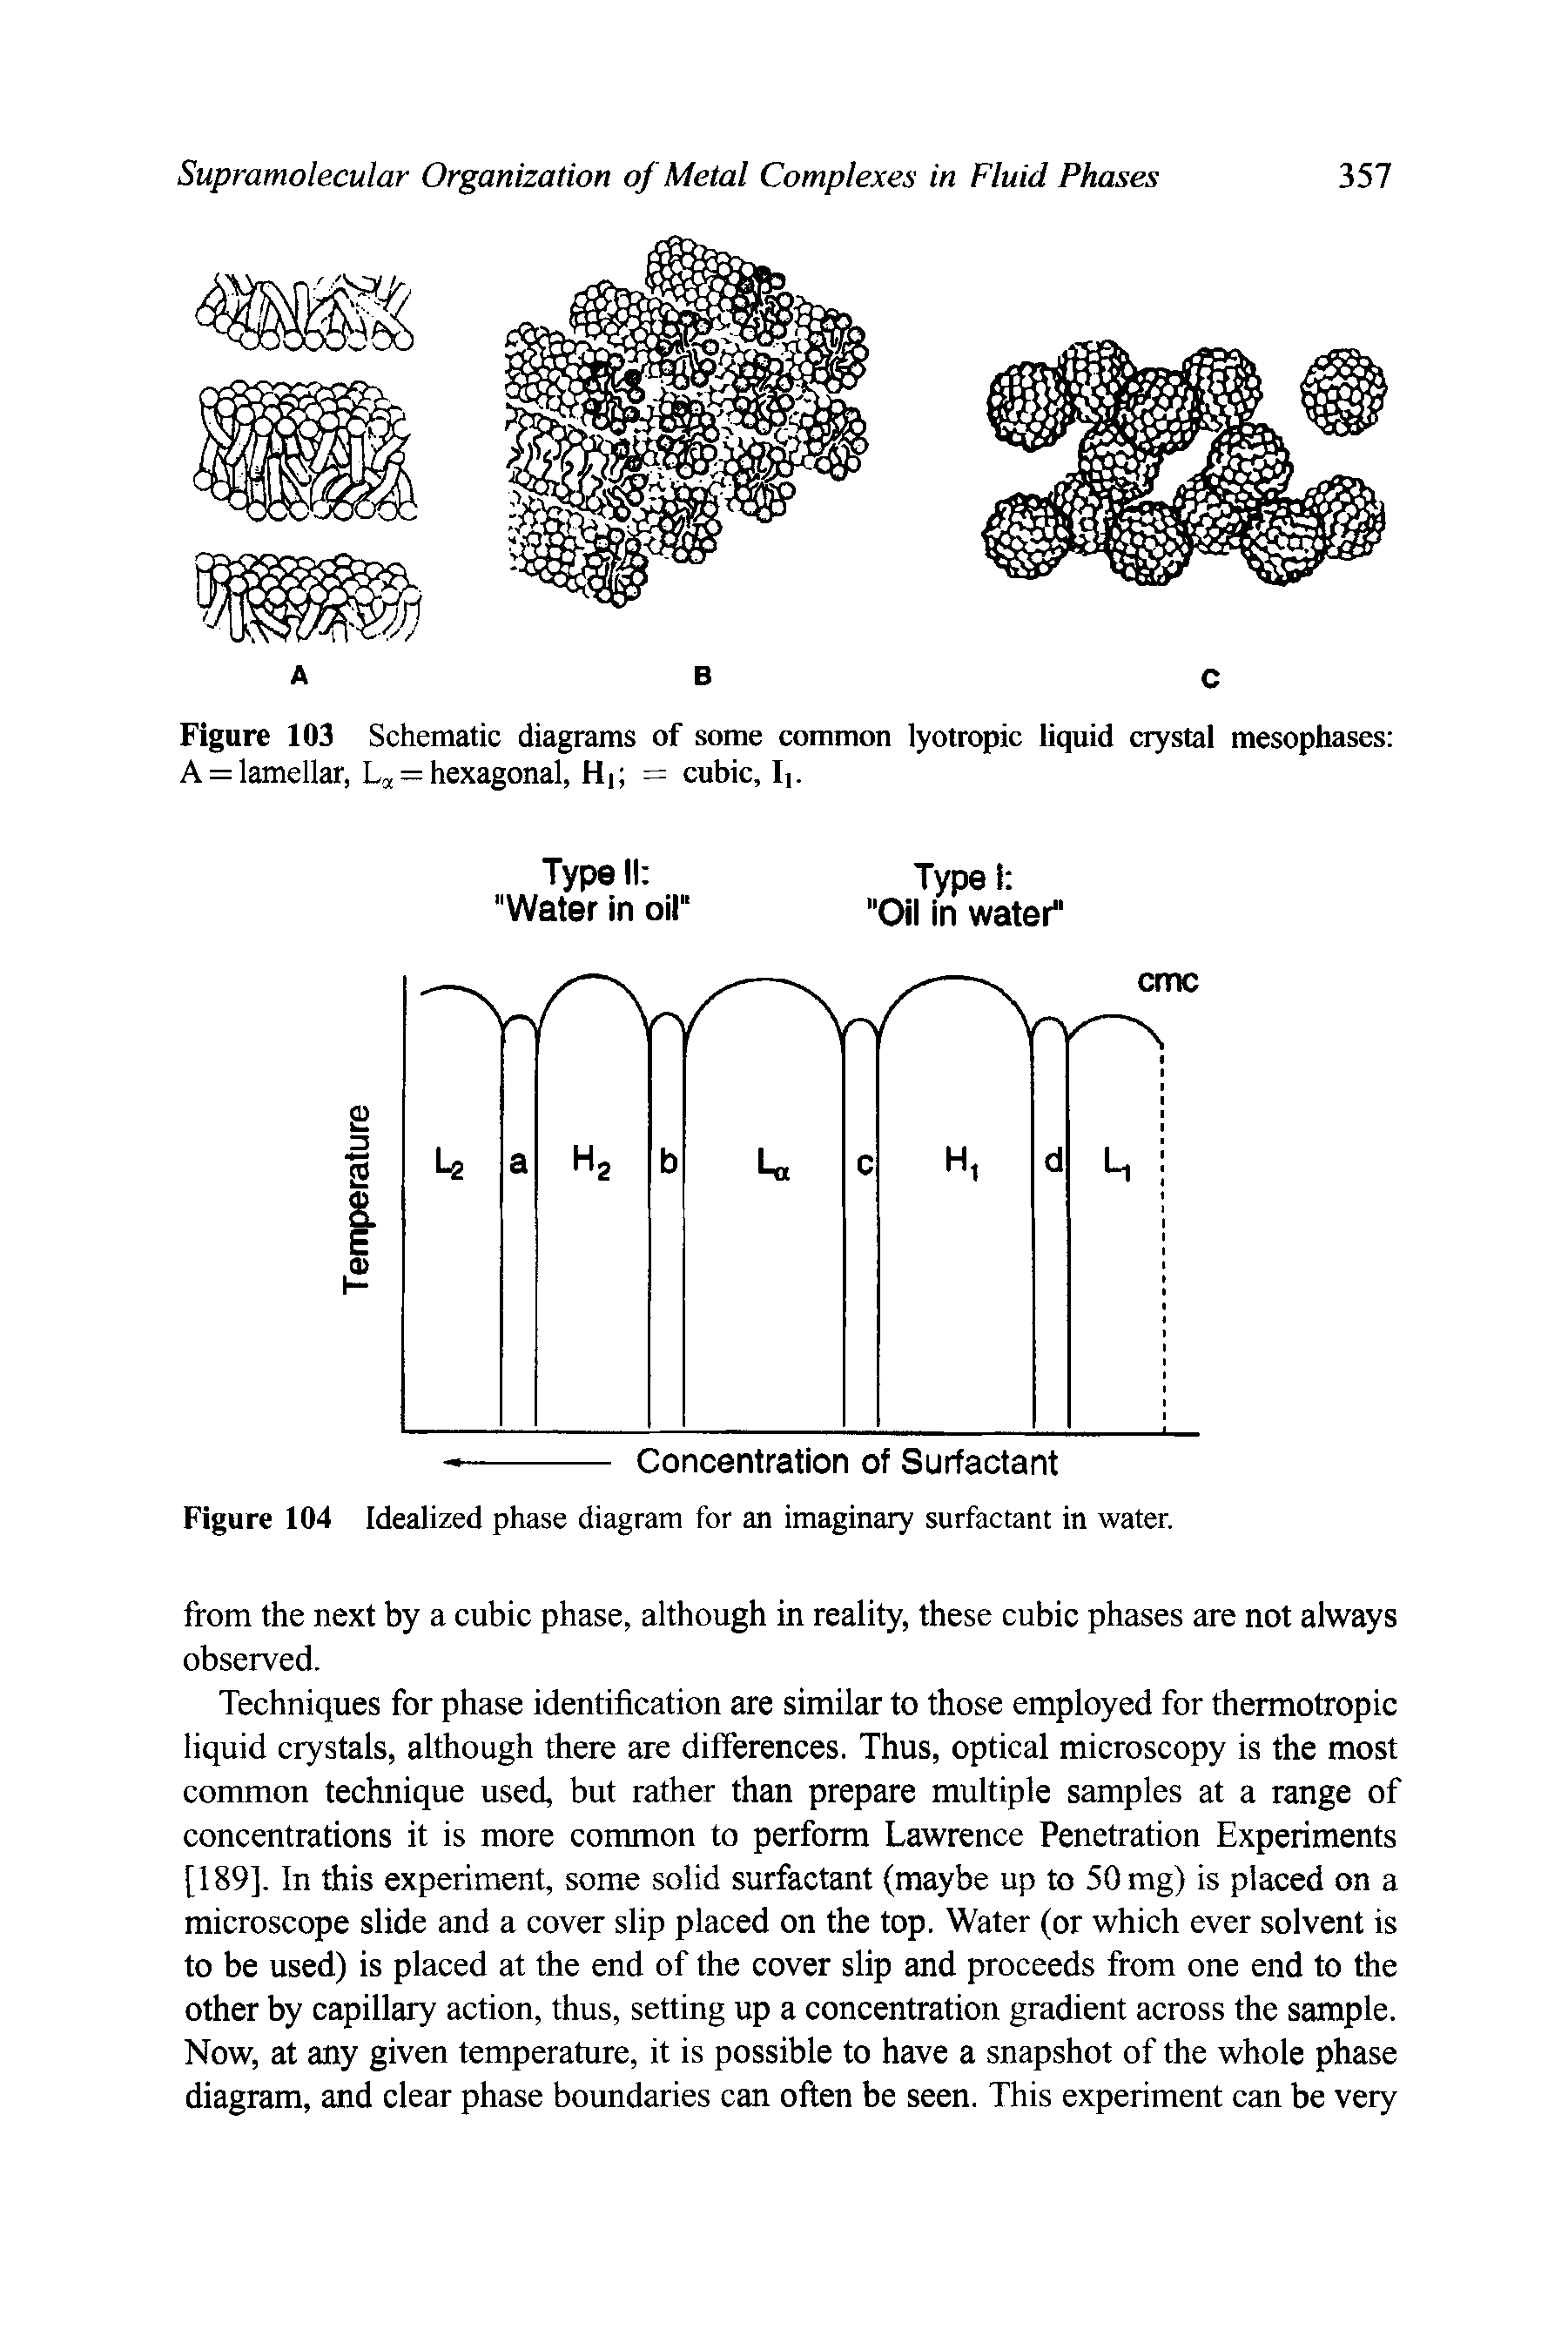 Figure 103 Schematic diagrams of some common lyotropic liquid crystal mesophases A = lamellar, = hexagonal, Hi = cubic, I. ...